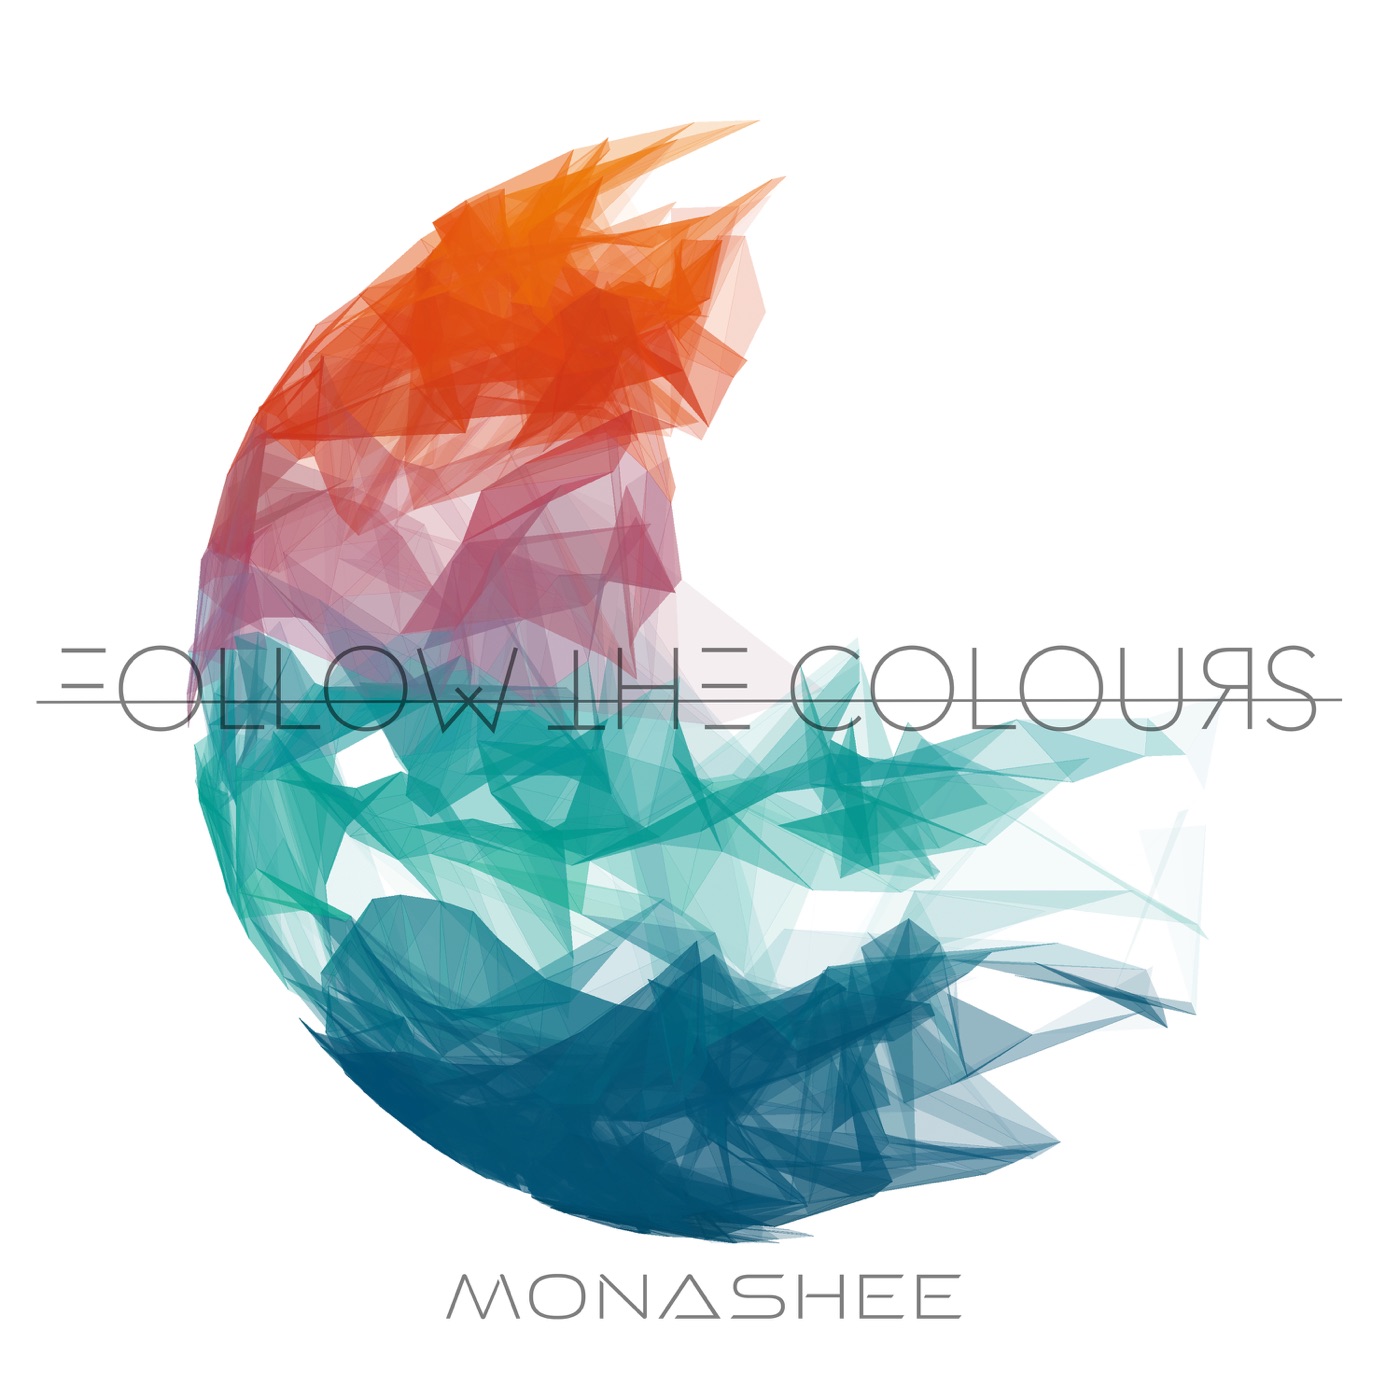 Monashee - Follow the Colours (2019)